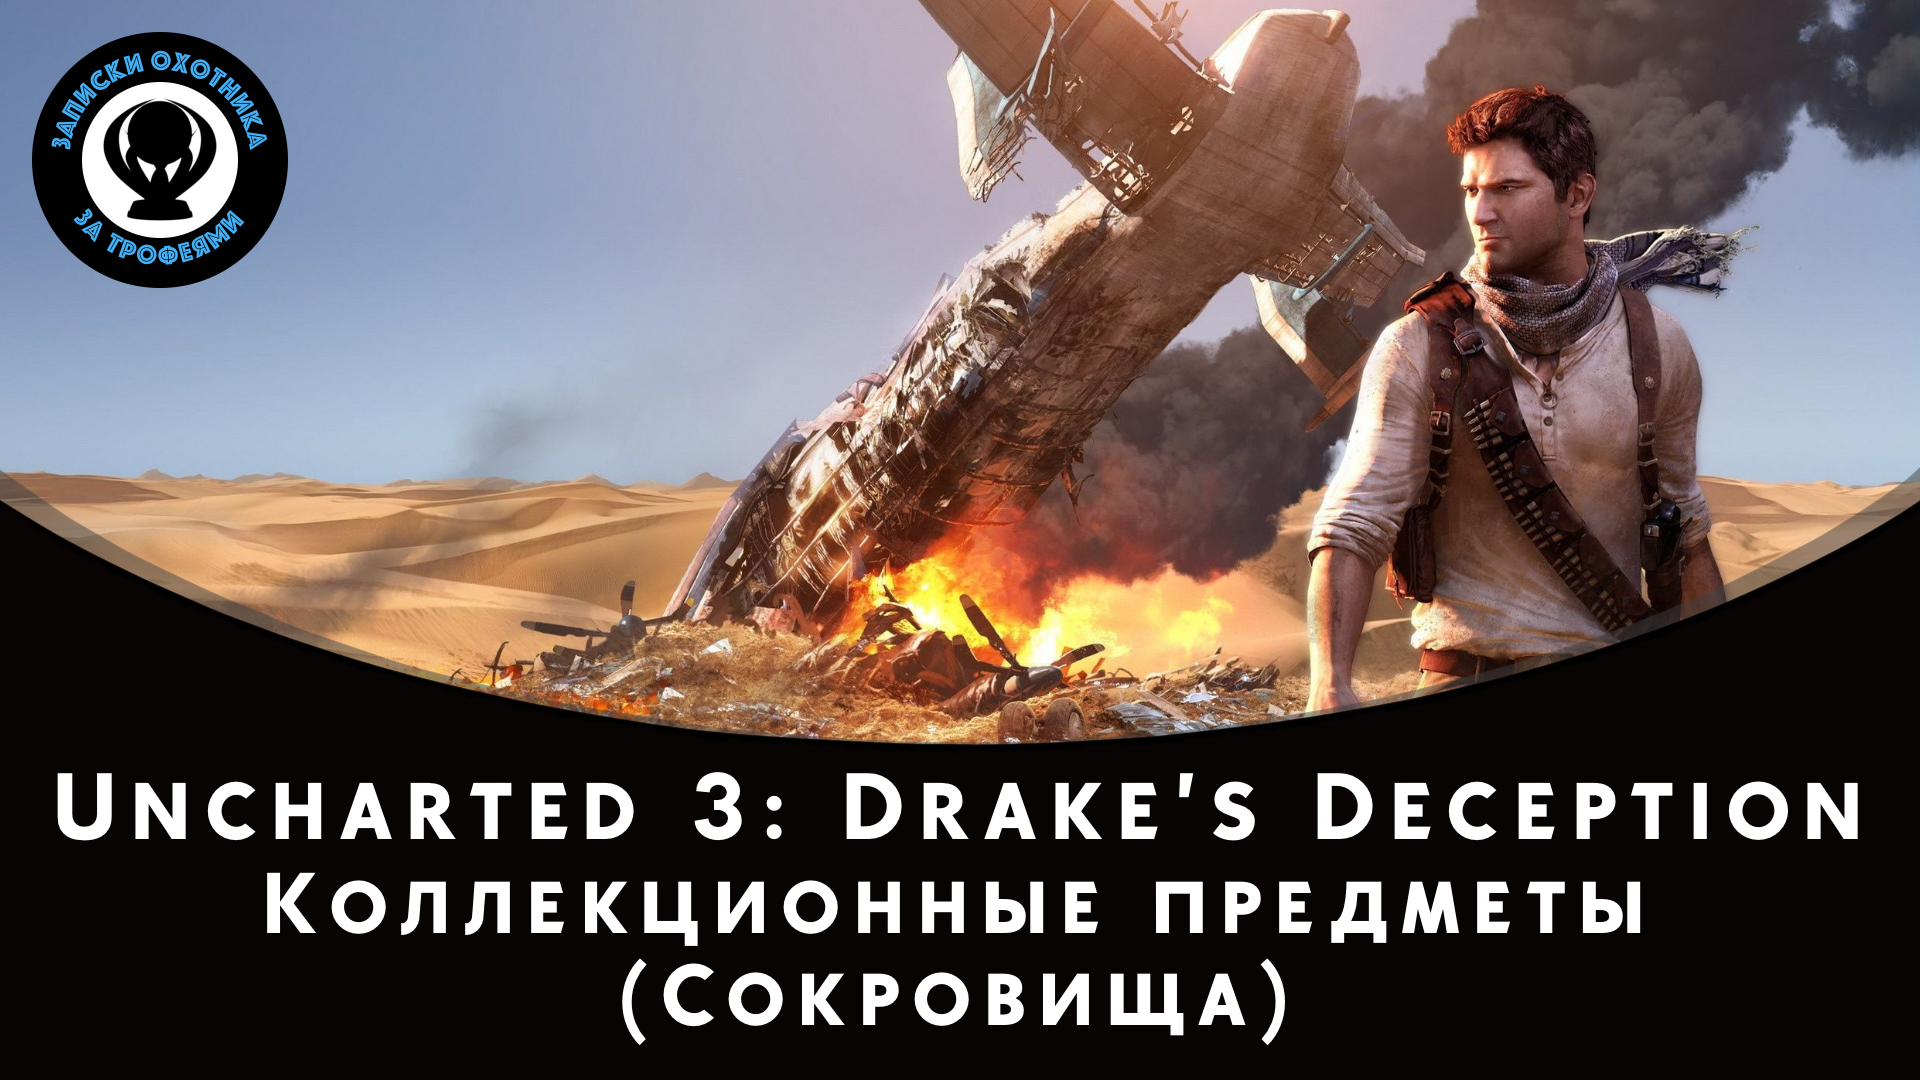 Uncharted 3: Drake’s Deception (Иллюзии Дрейка) - Все сокровища